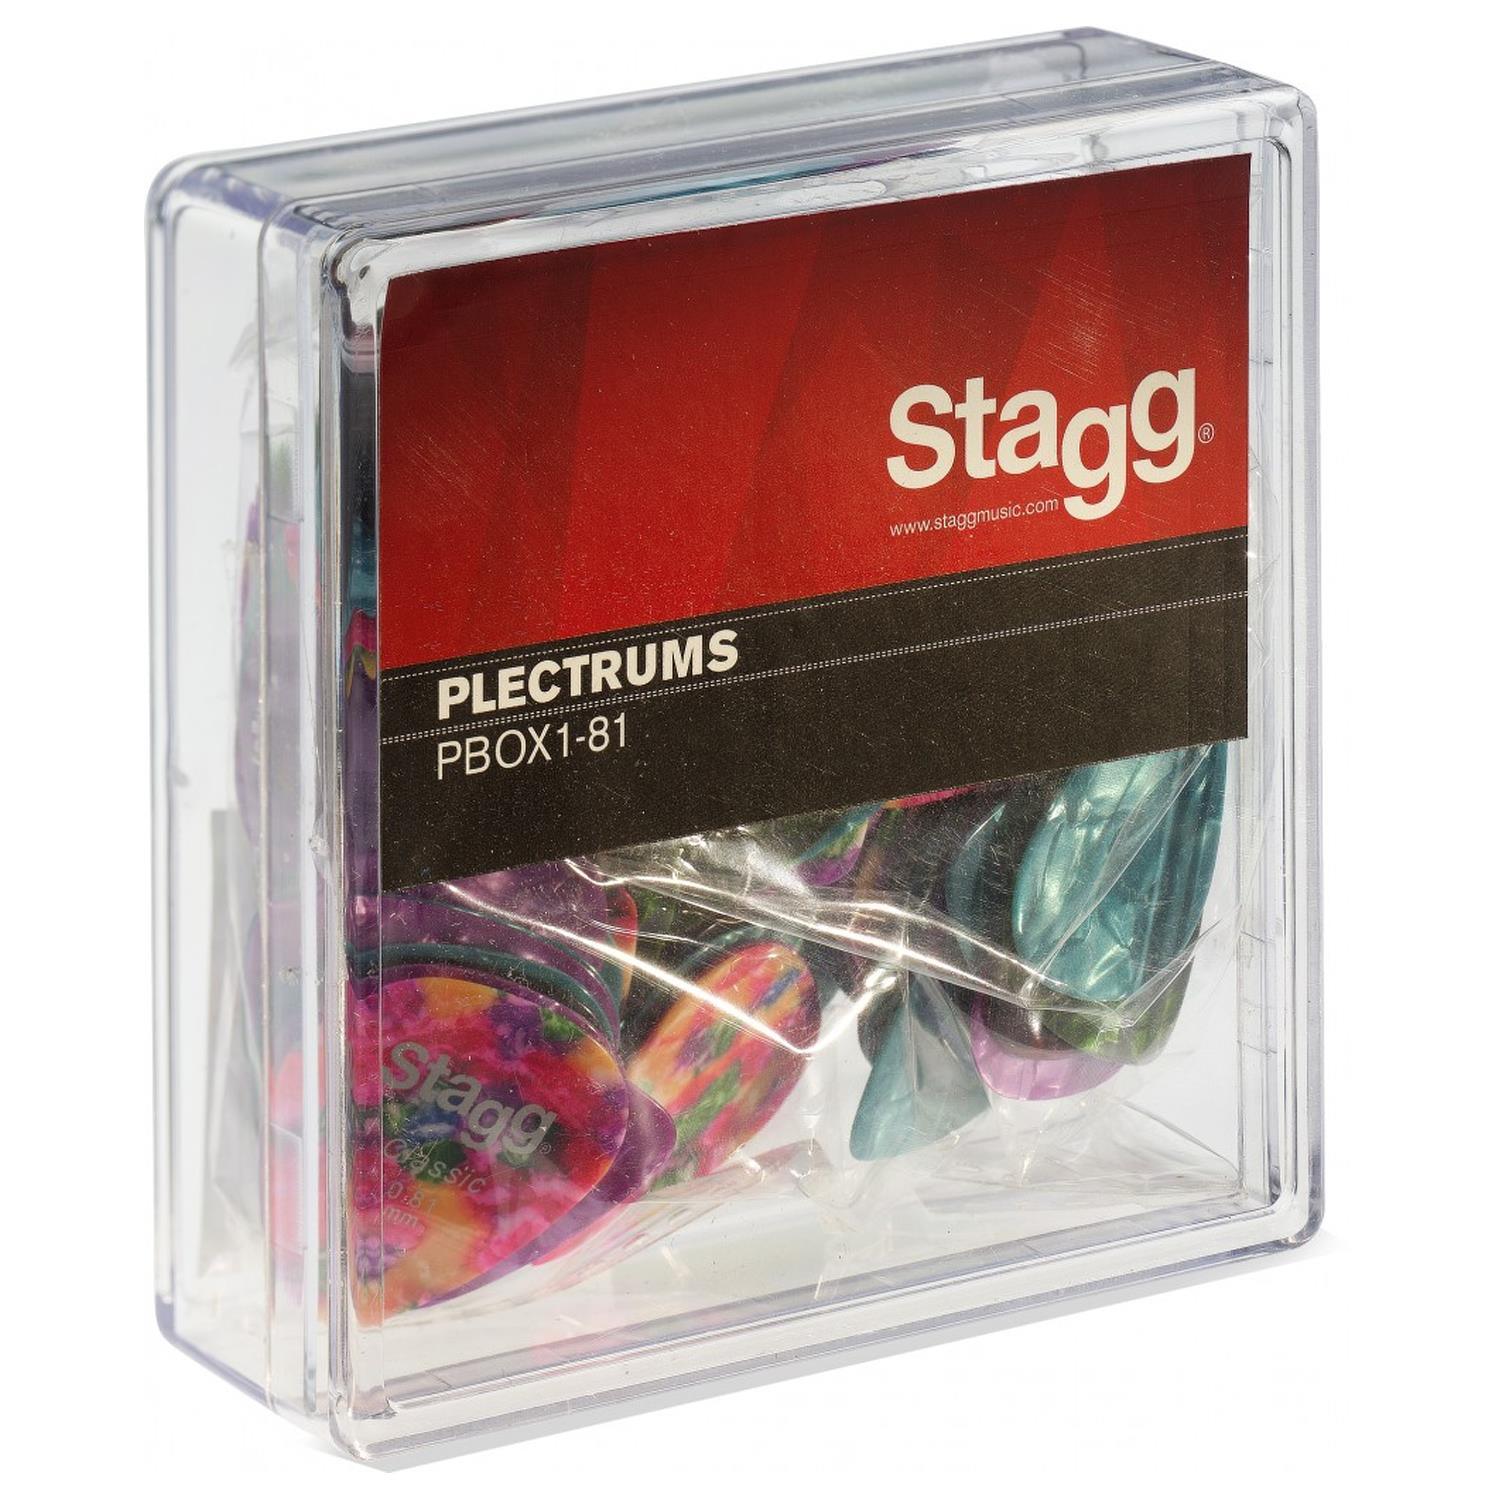 100 x Stagg Plastic Plectrums Picks 0.81mm Multicoloured - DY Pro Audio